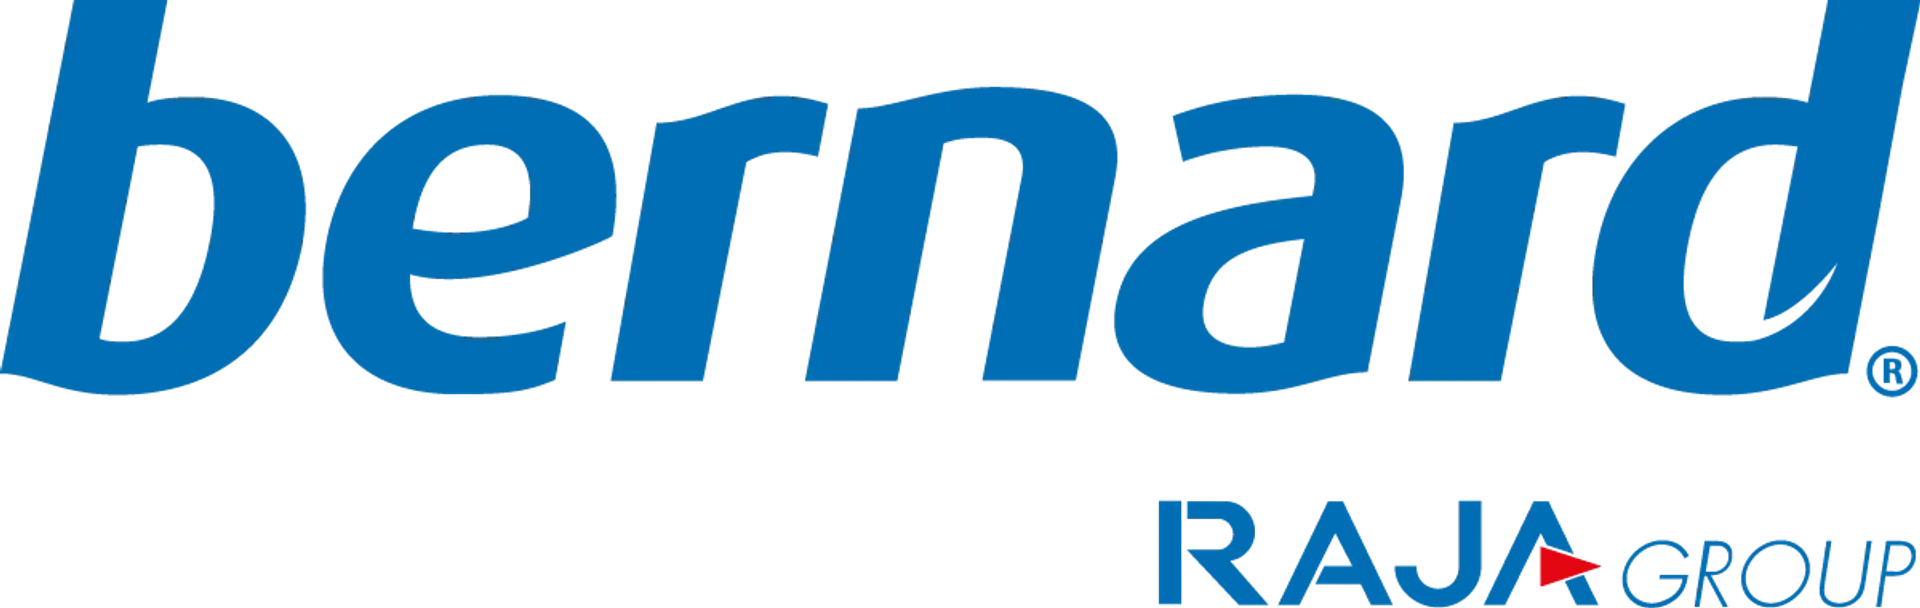 BERNARD logo